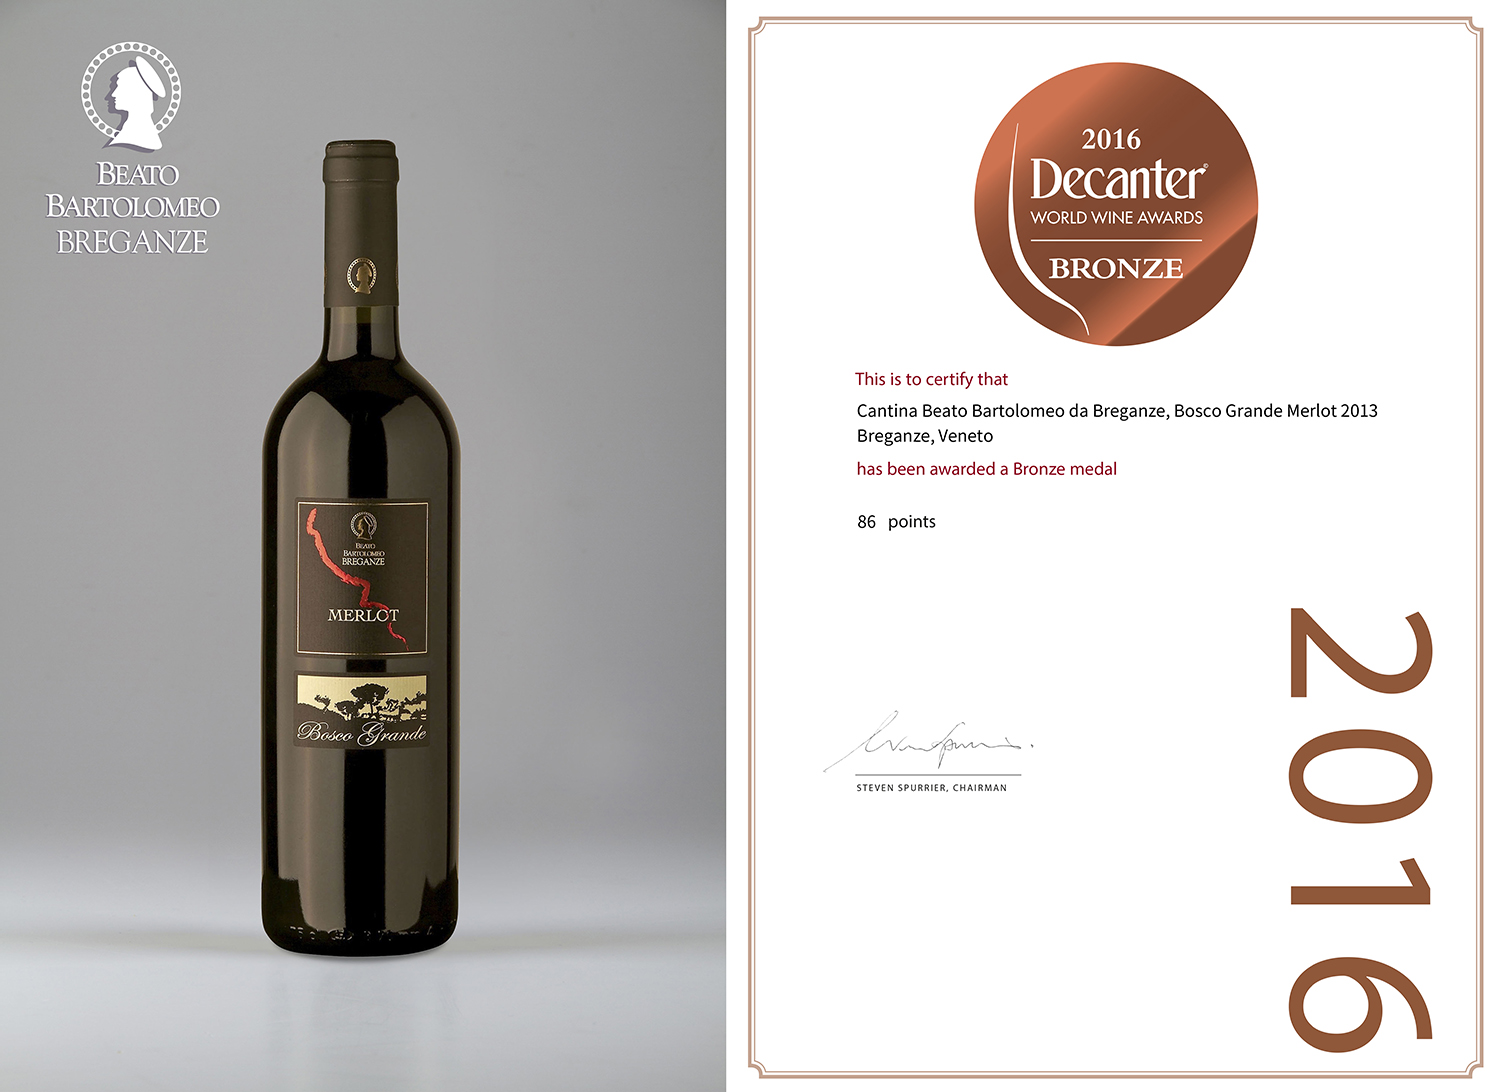 Merlot Breganze Doc Riserva “Bosco Grande” Decanter World Wine Awards 2016